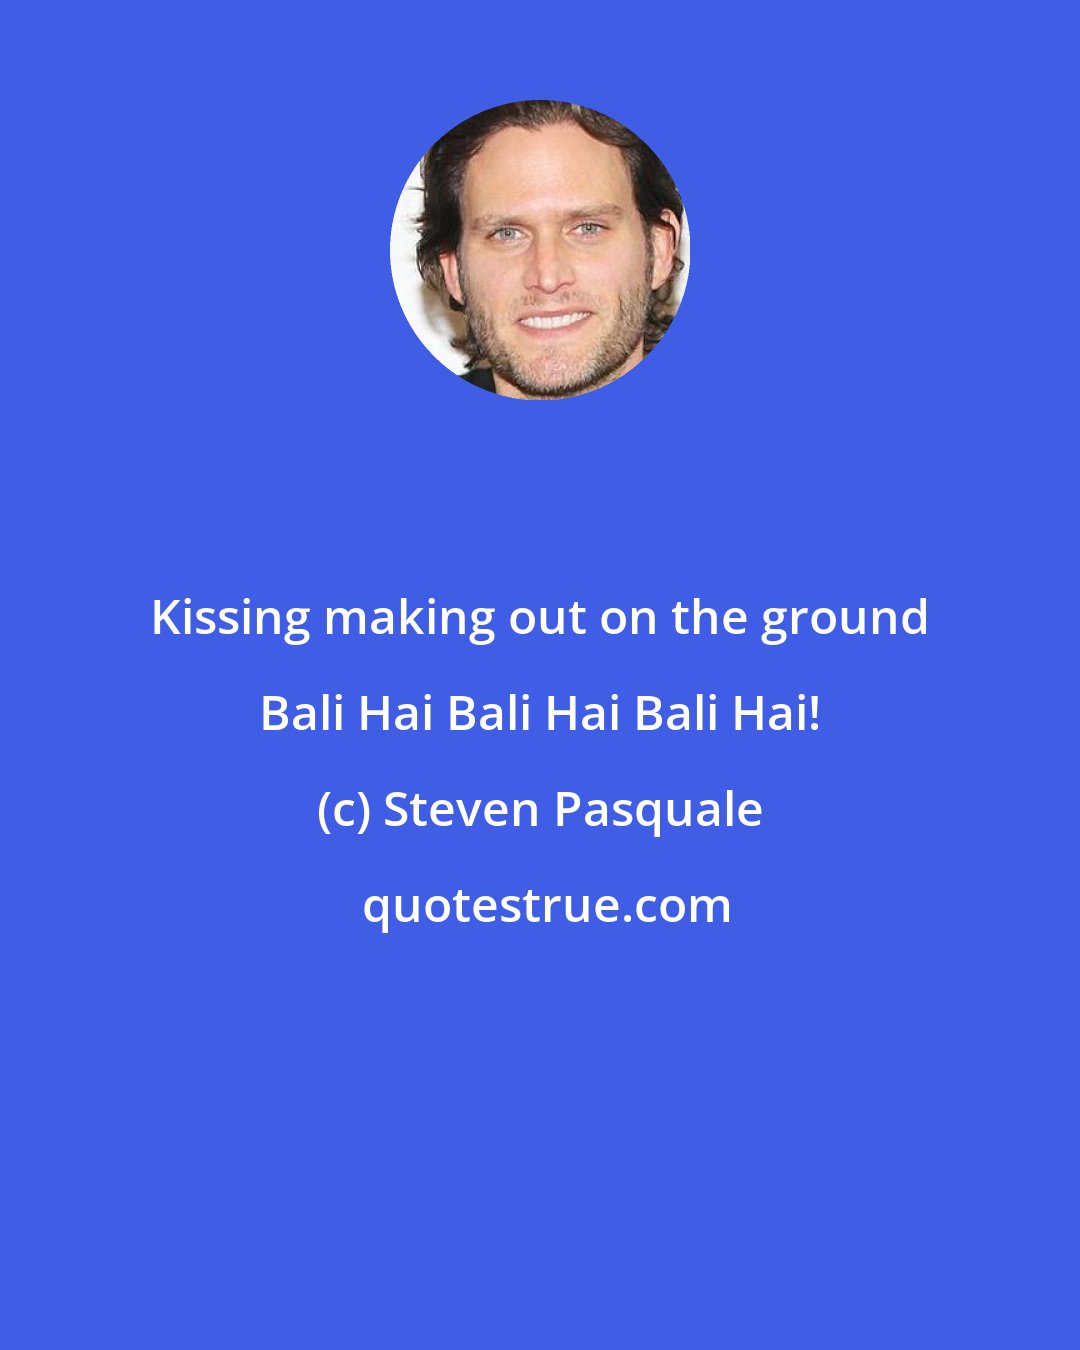 Steven Pasquale: Kissing making out on the ground Bali Hai Bali Hai Bali Hai!